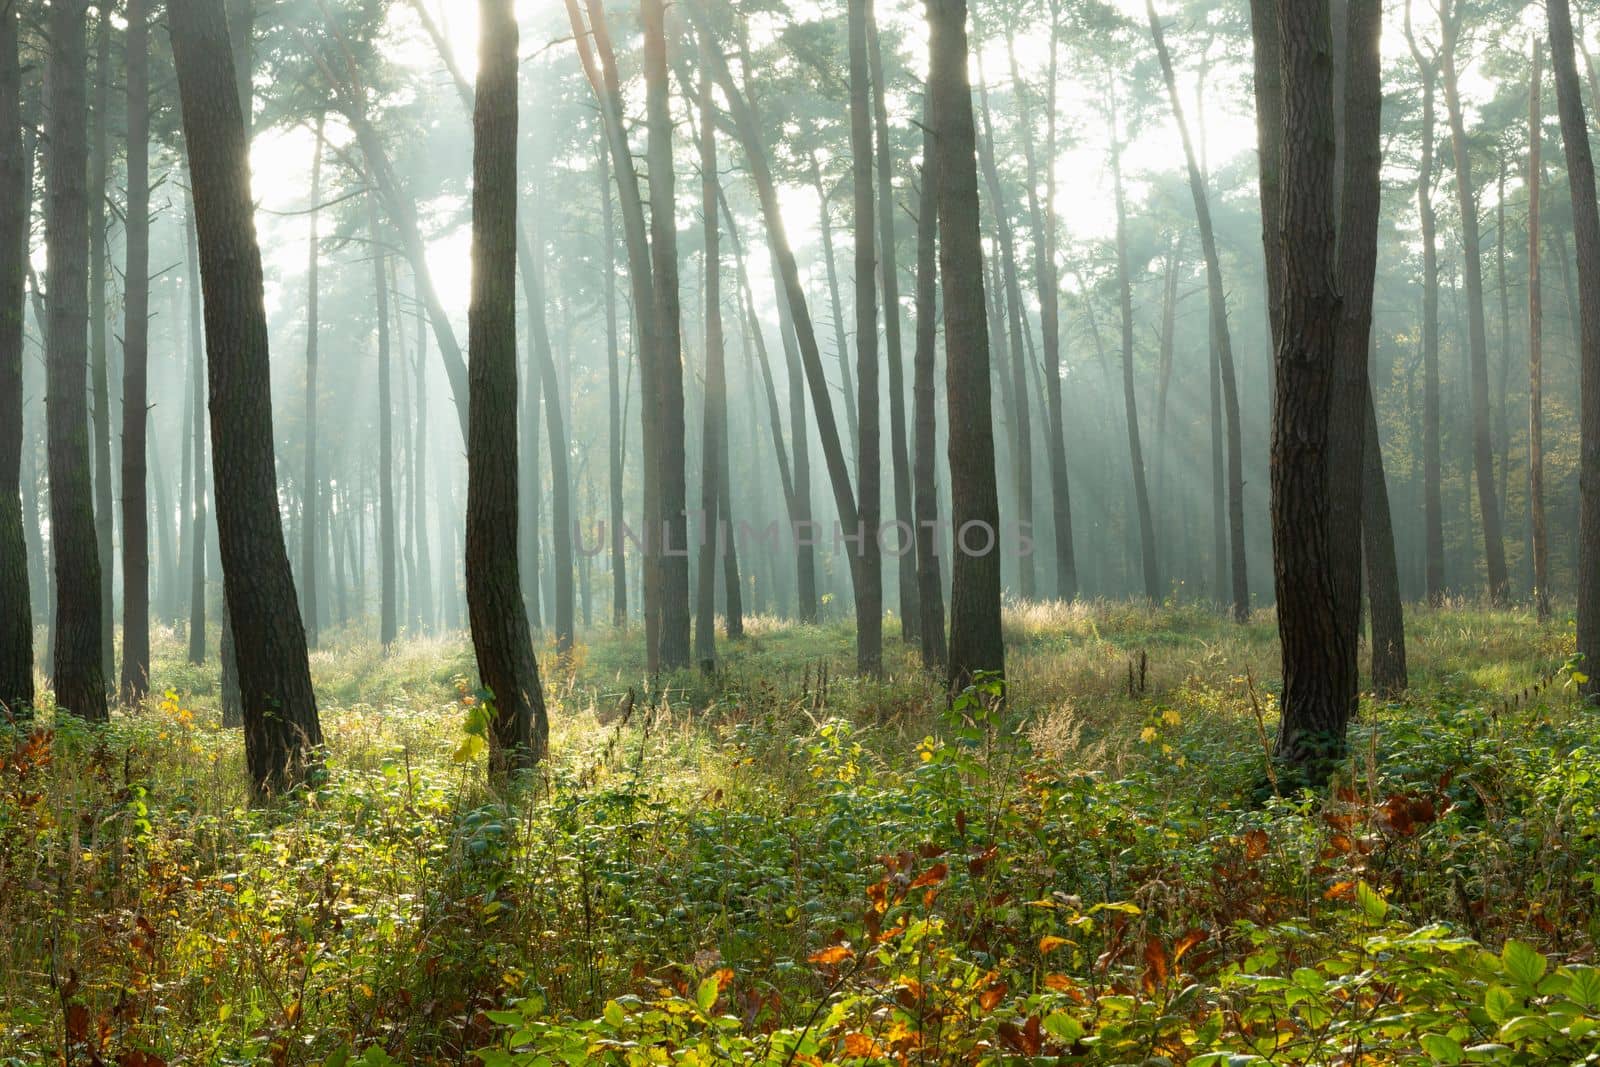 Misty autumn forest illuminated by the sun by darekb22